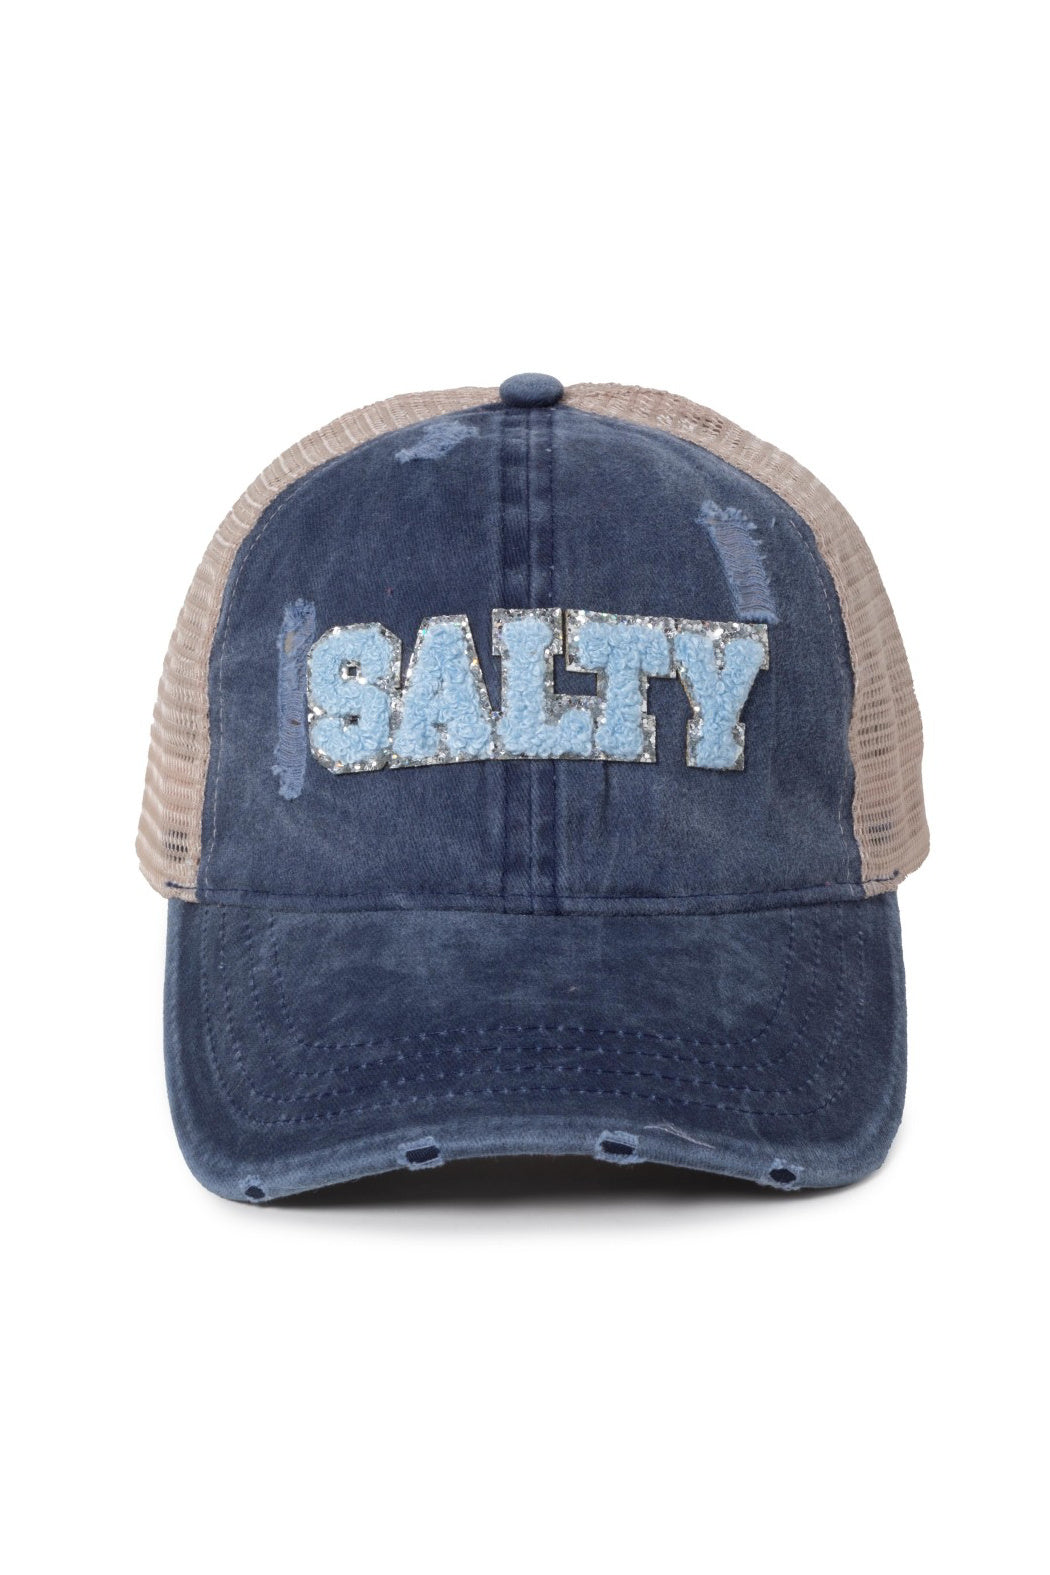 Distressed Chenille Glitz Salty Trucker Cap